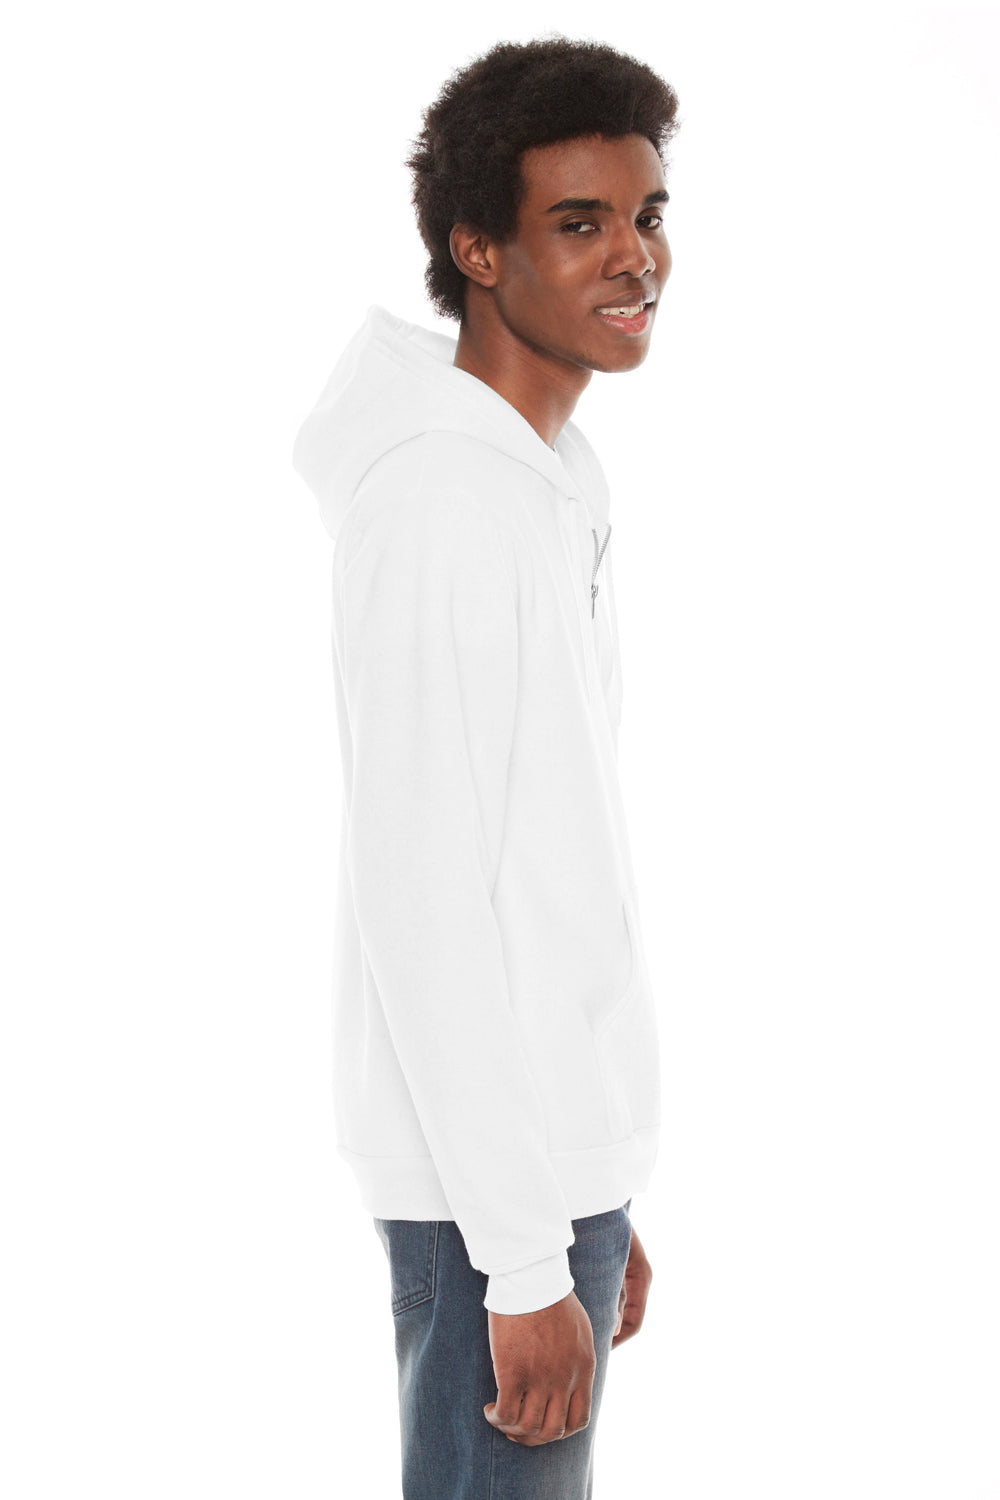 American Apparel F497W Mens Flex Fleece Full Zip Hooded Sweatshirt Hoodie White Side